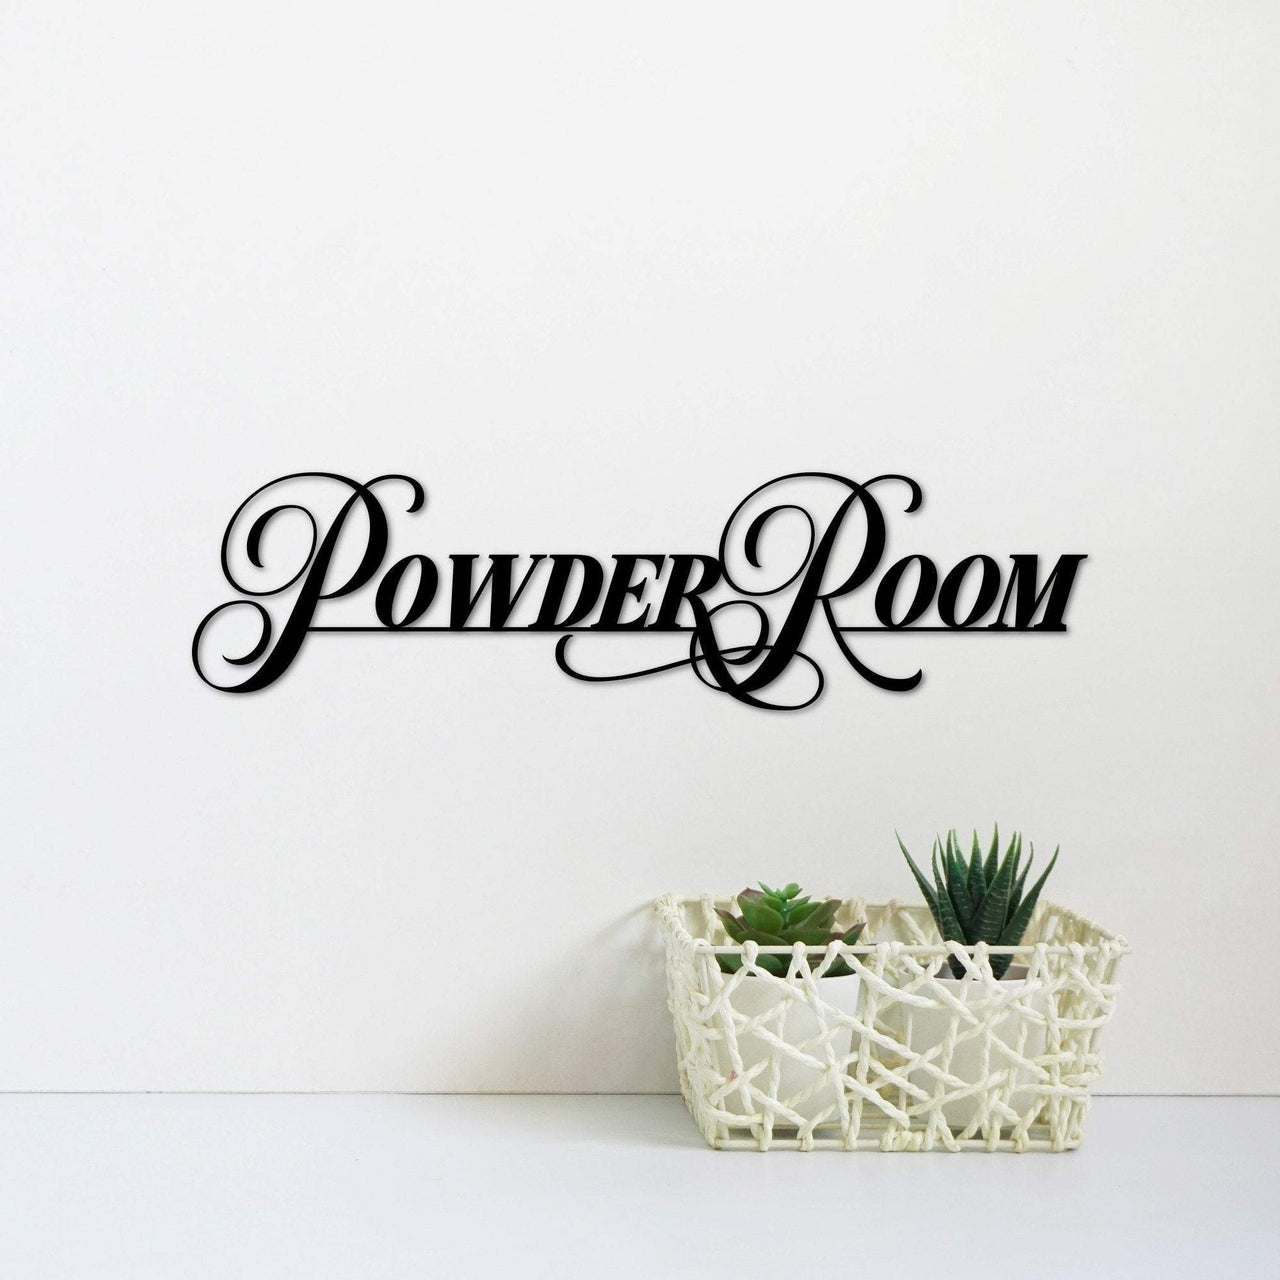 Metal Powder Room Sign | Restroom Decor | Metal Wall Art | Bathroom Decor | Powder Room Wall Art | Powder Room Decor | Restroom Decoration